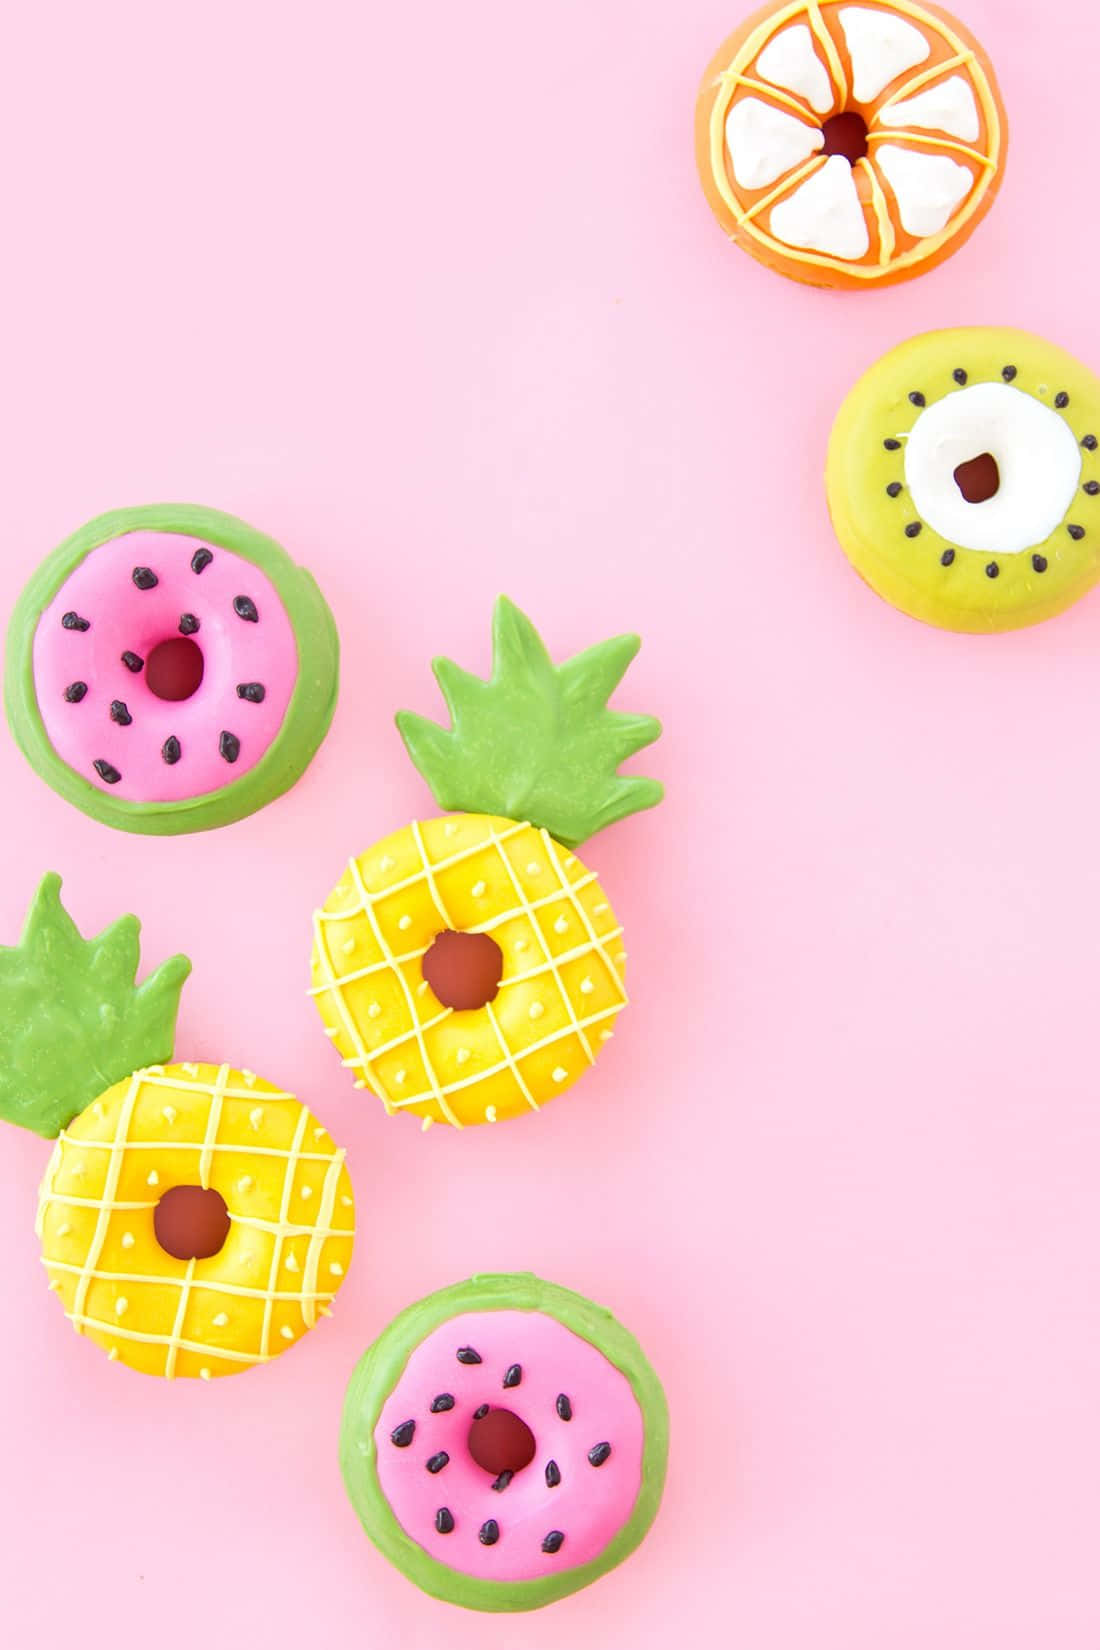 Kawaii Fruit: Happy Watermelon and Friends Wallpaper